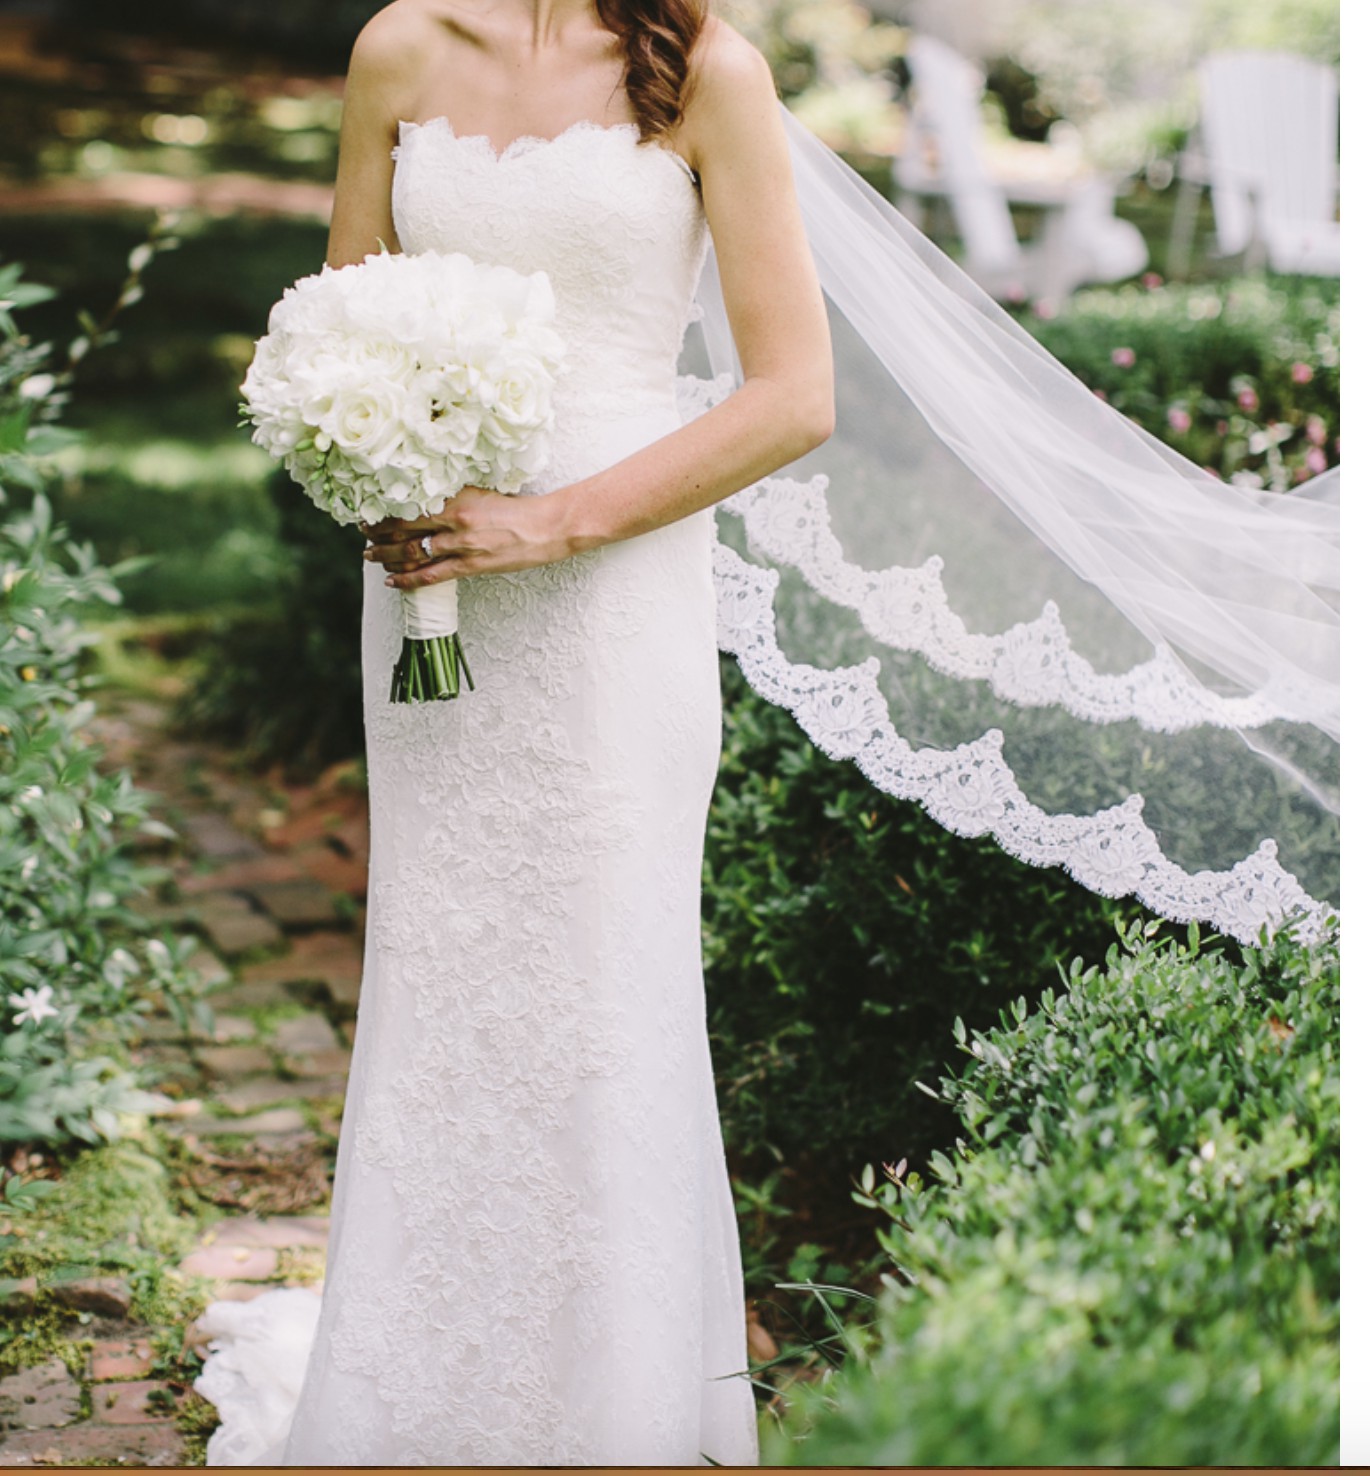 Amy Kuschel Rosemary Preowned Wedding Dress Save 70% - Stillwhite